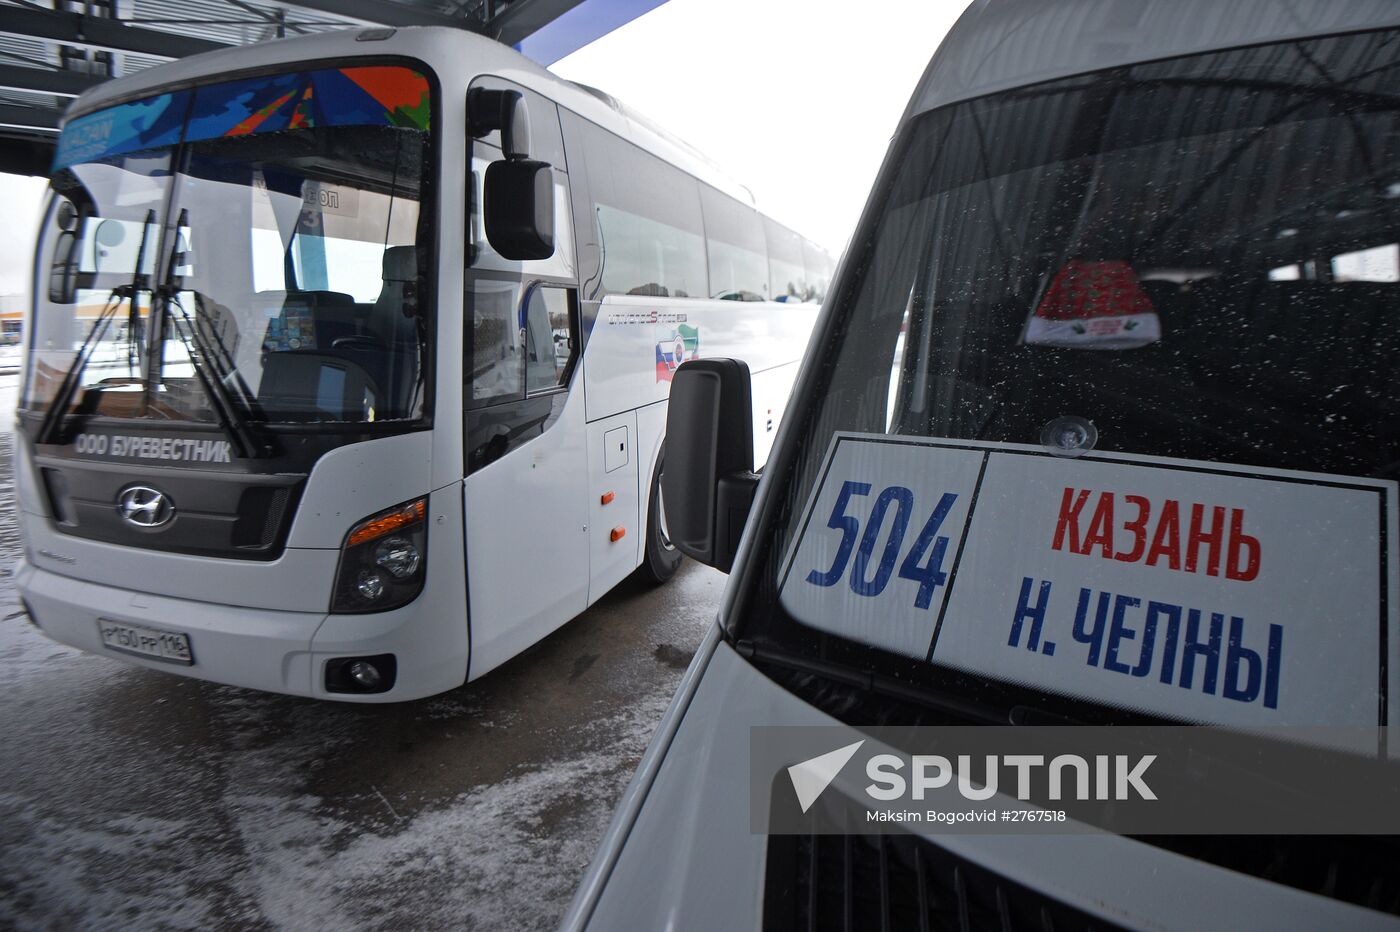 Vostochny bus terminal opens in Kazan